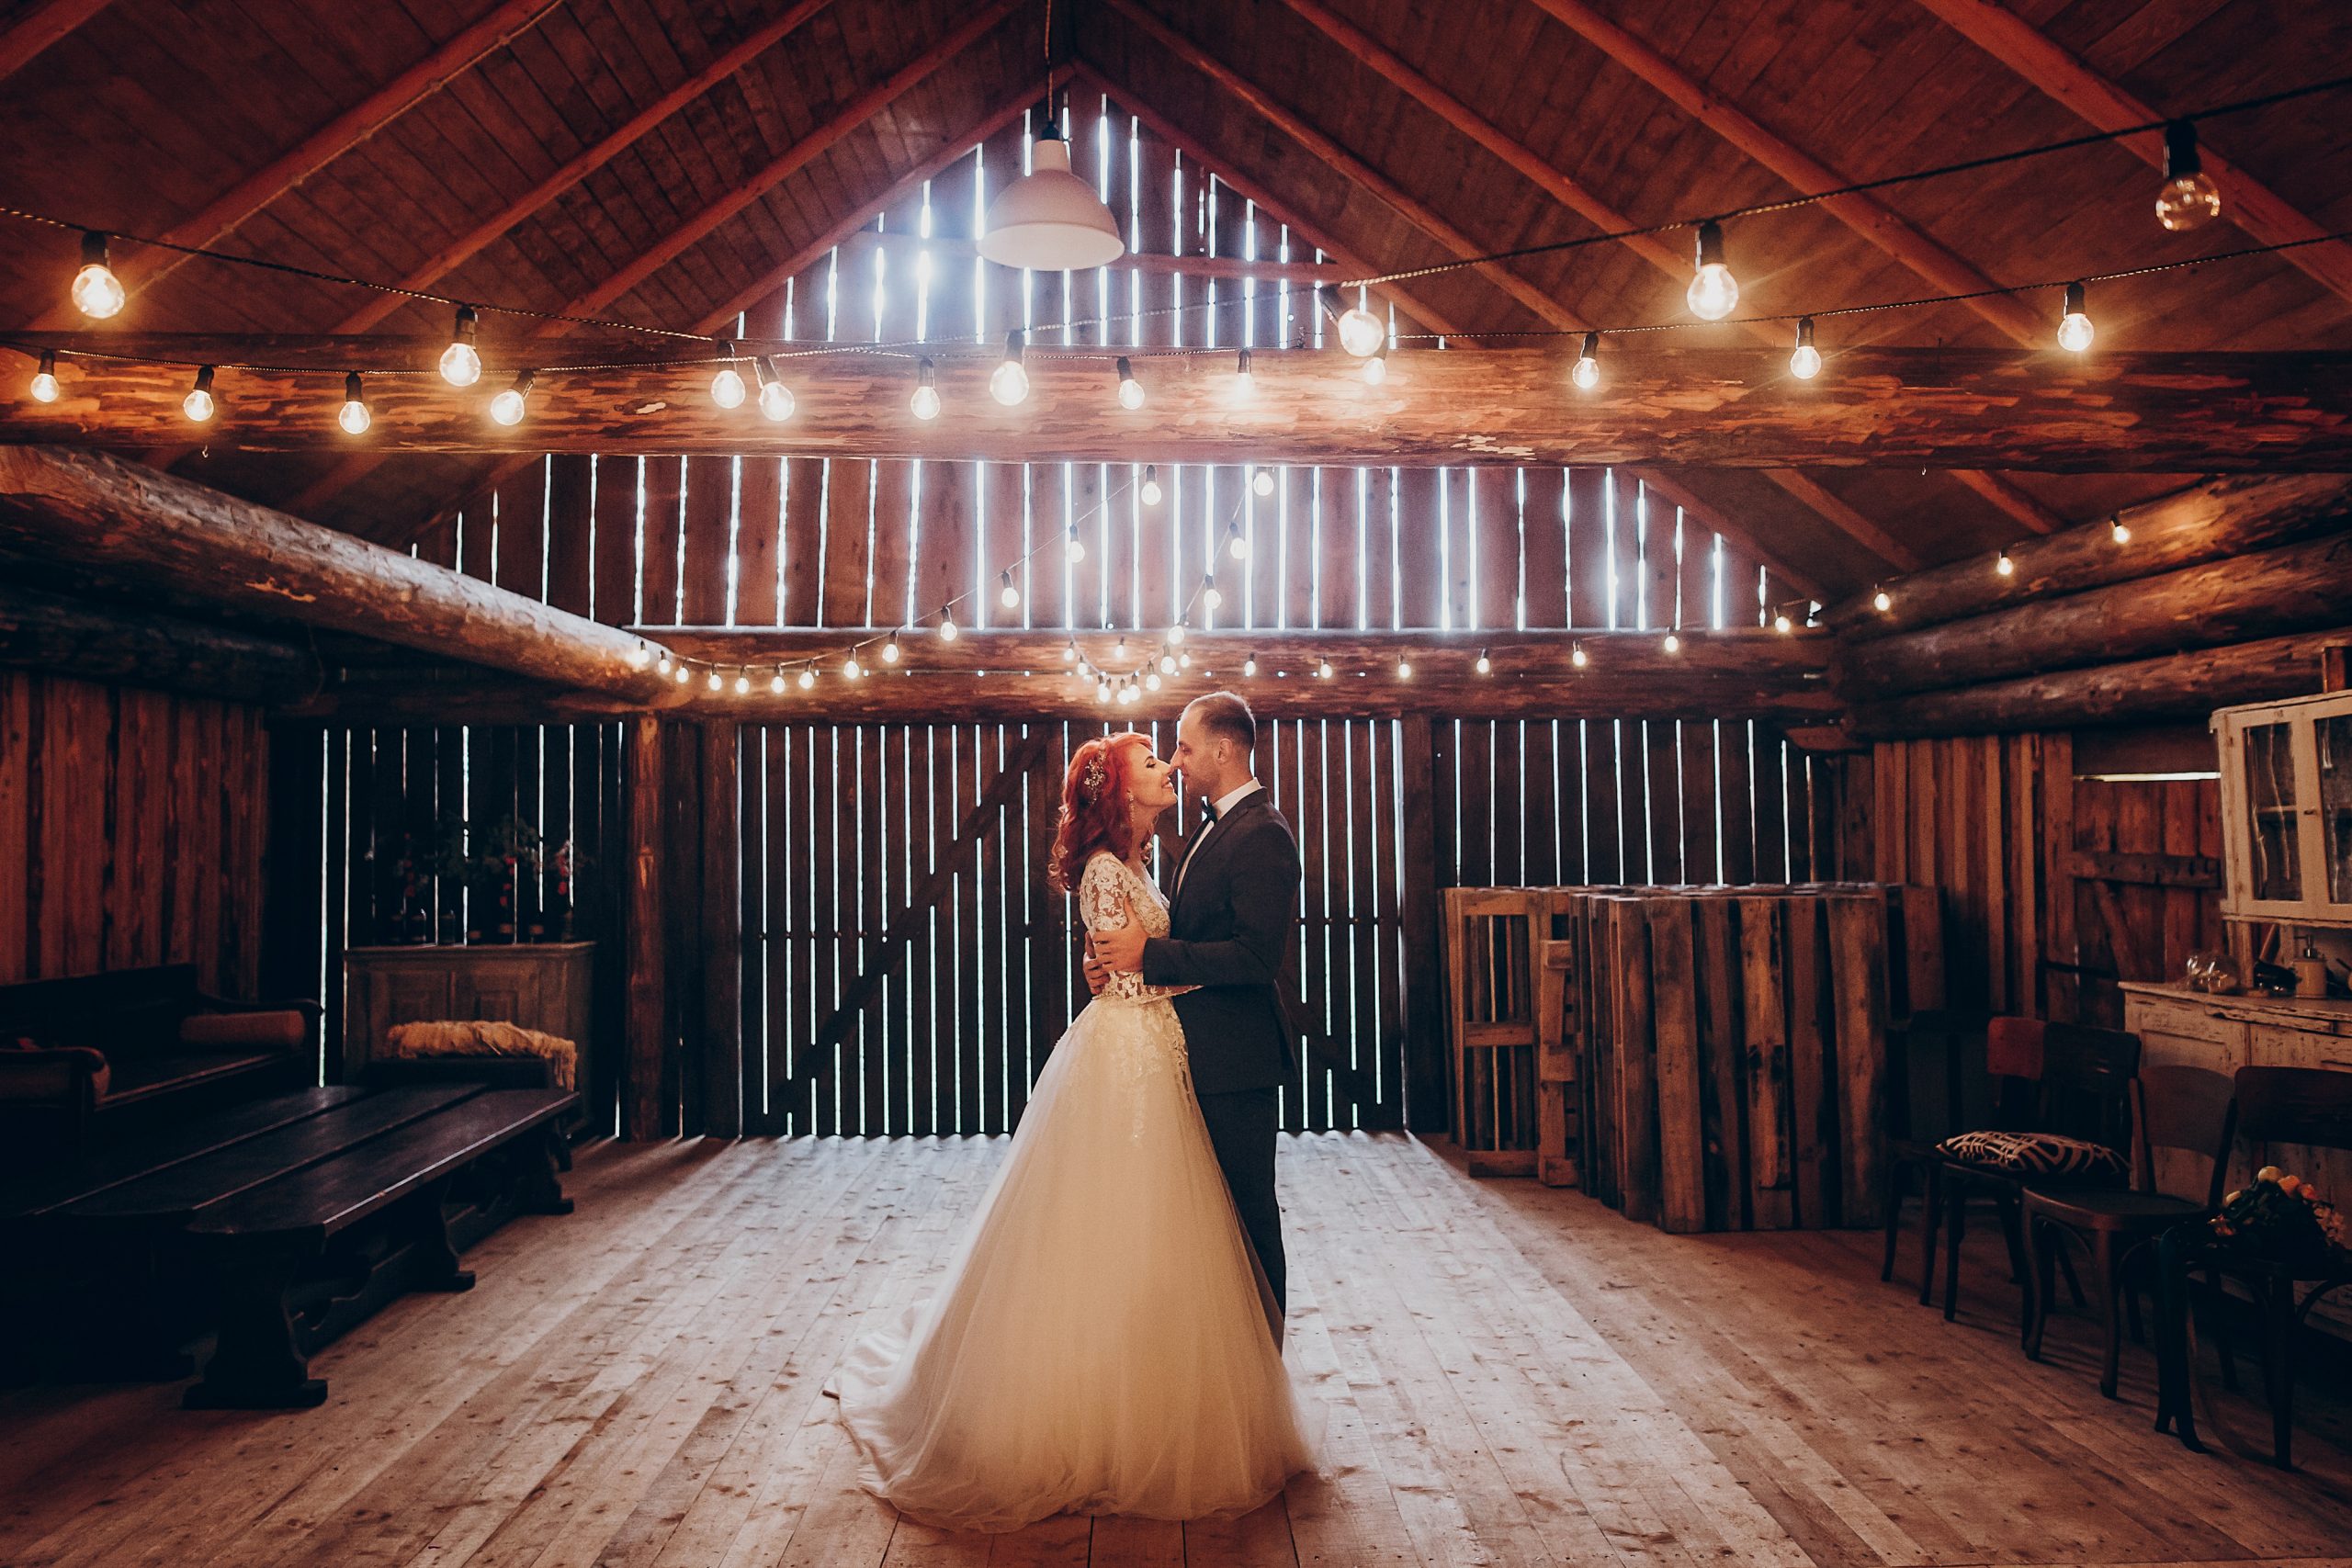 wedding lighting